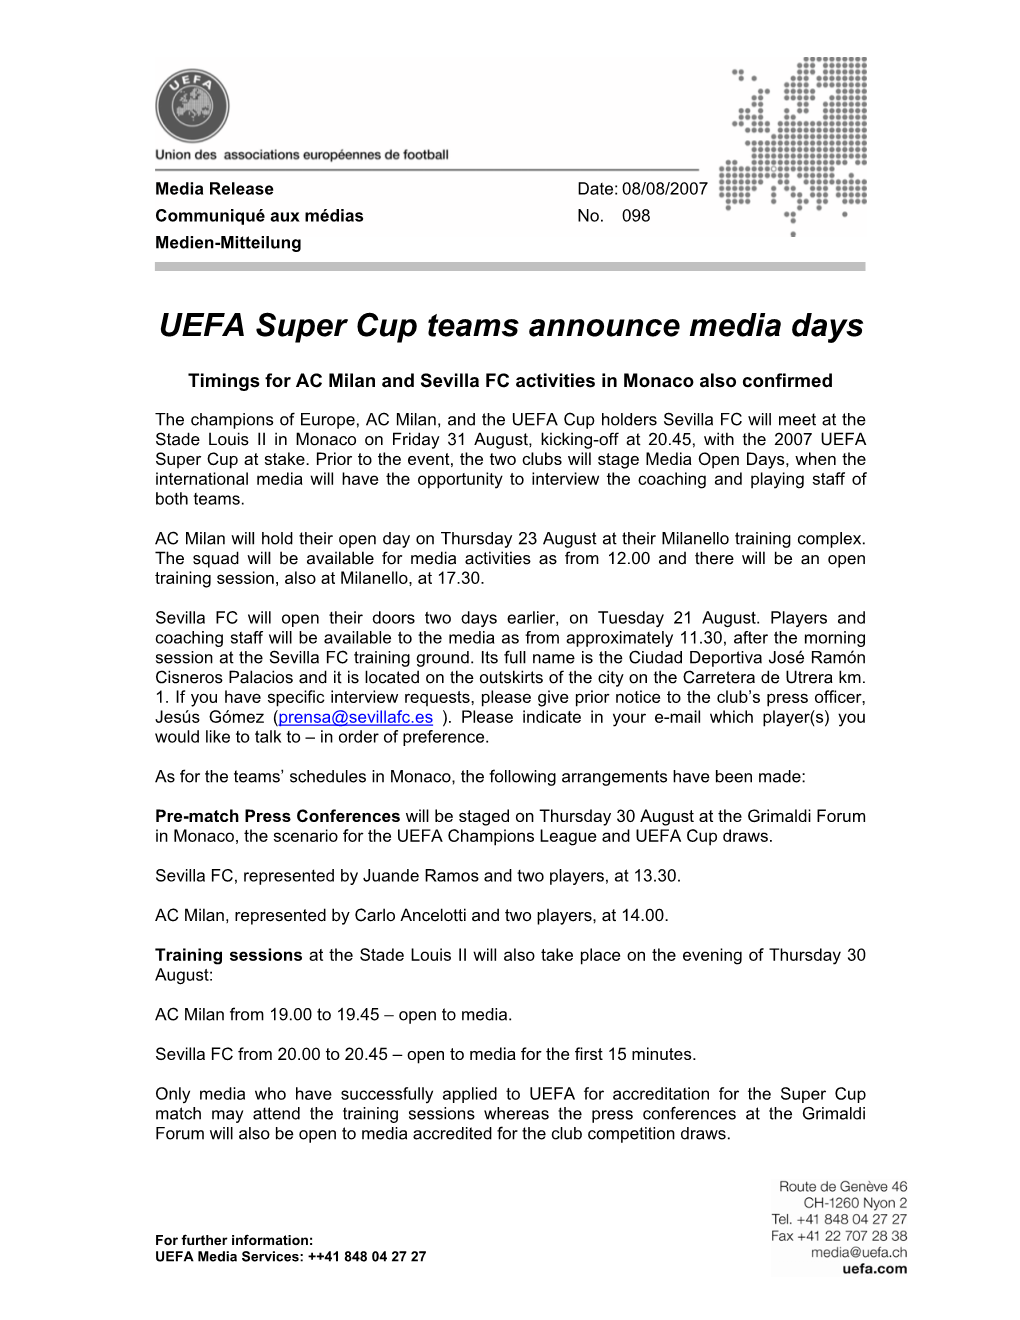 UEFA Super Cup Teams Announce Media Days